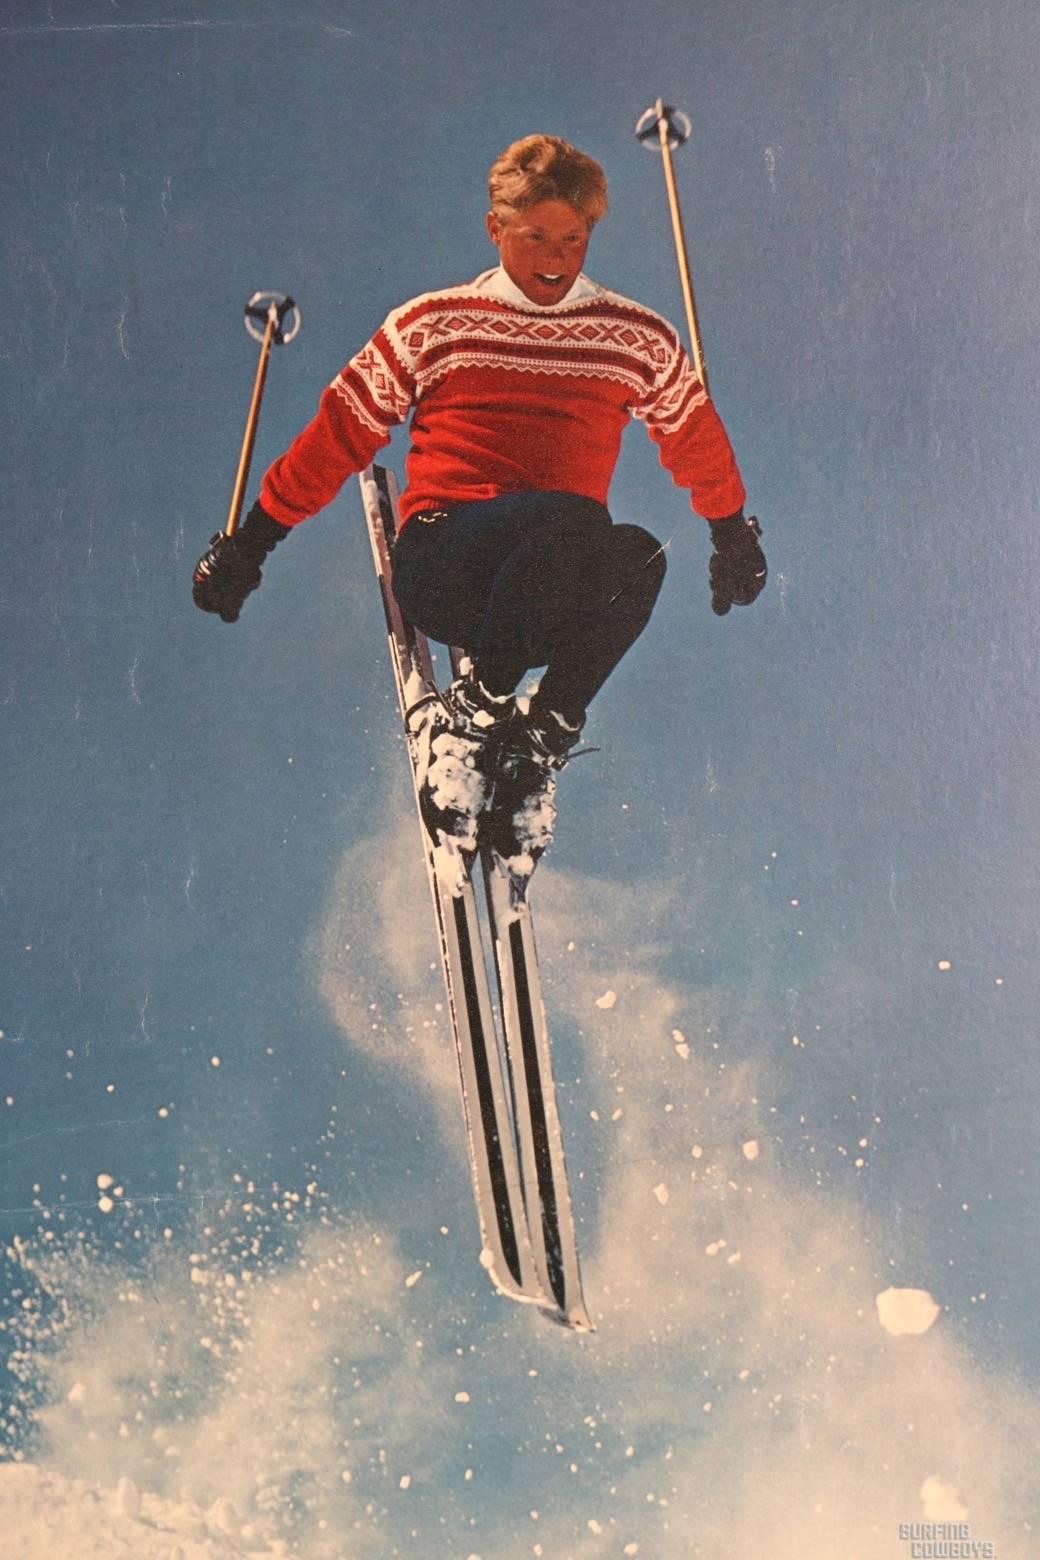 American Mammoth California Original Vintage Ski Poster, circa 1955